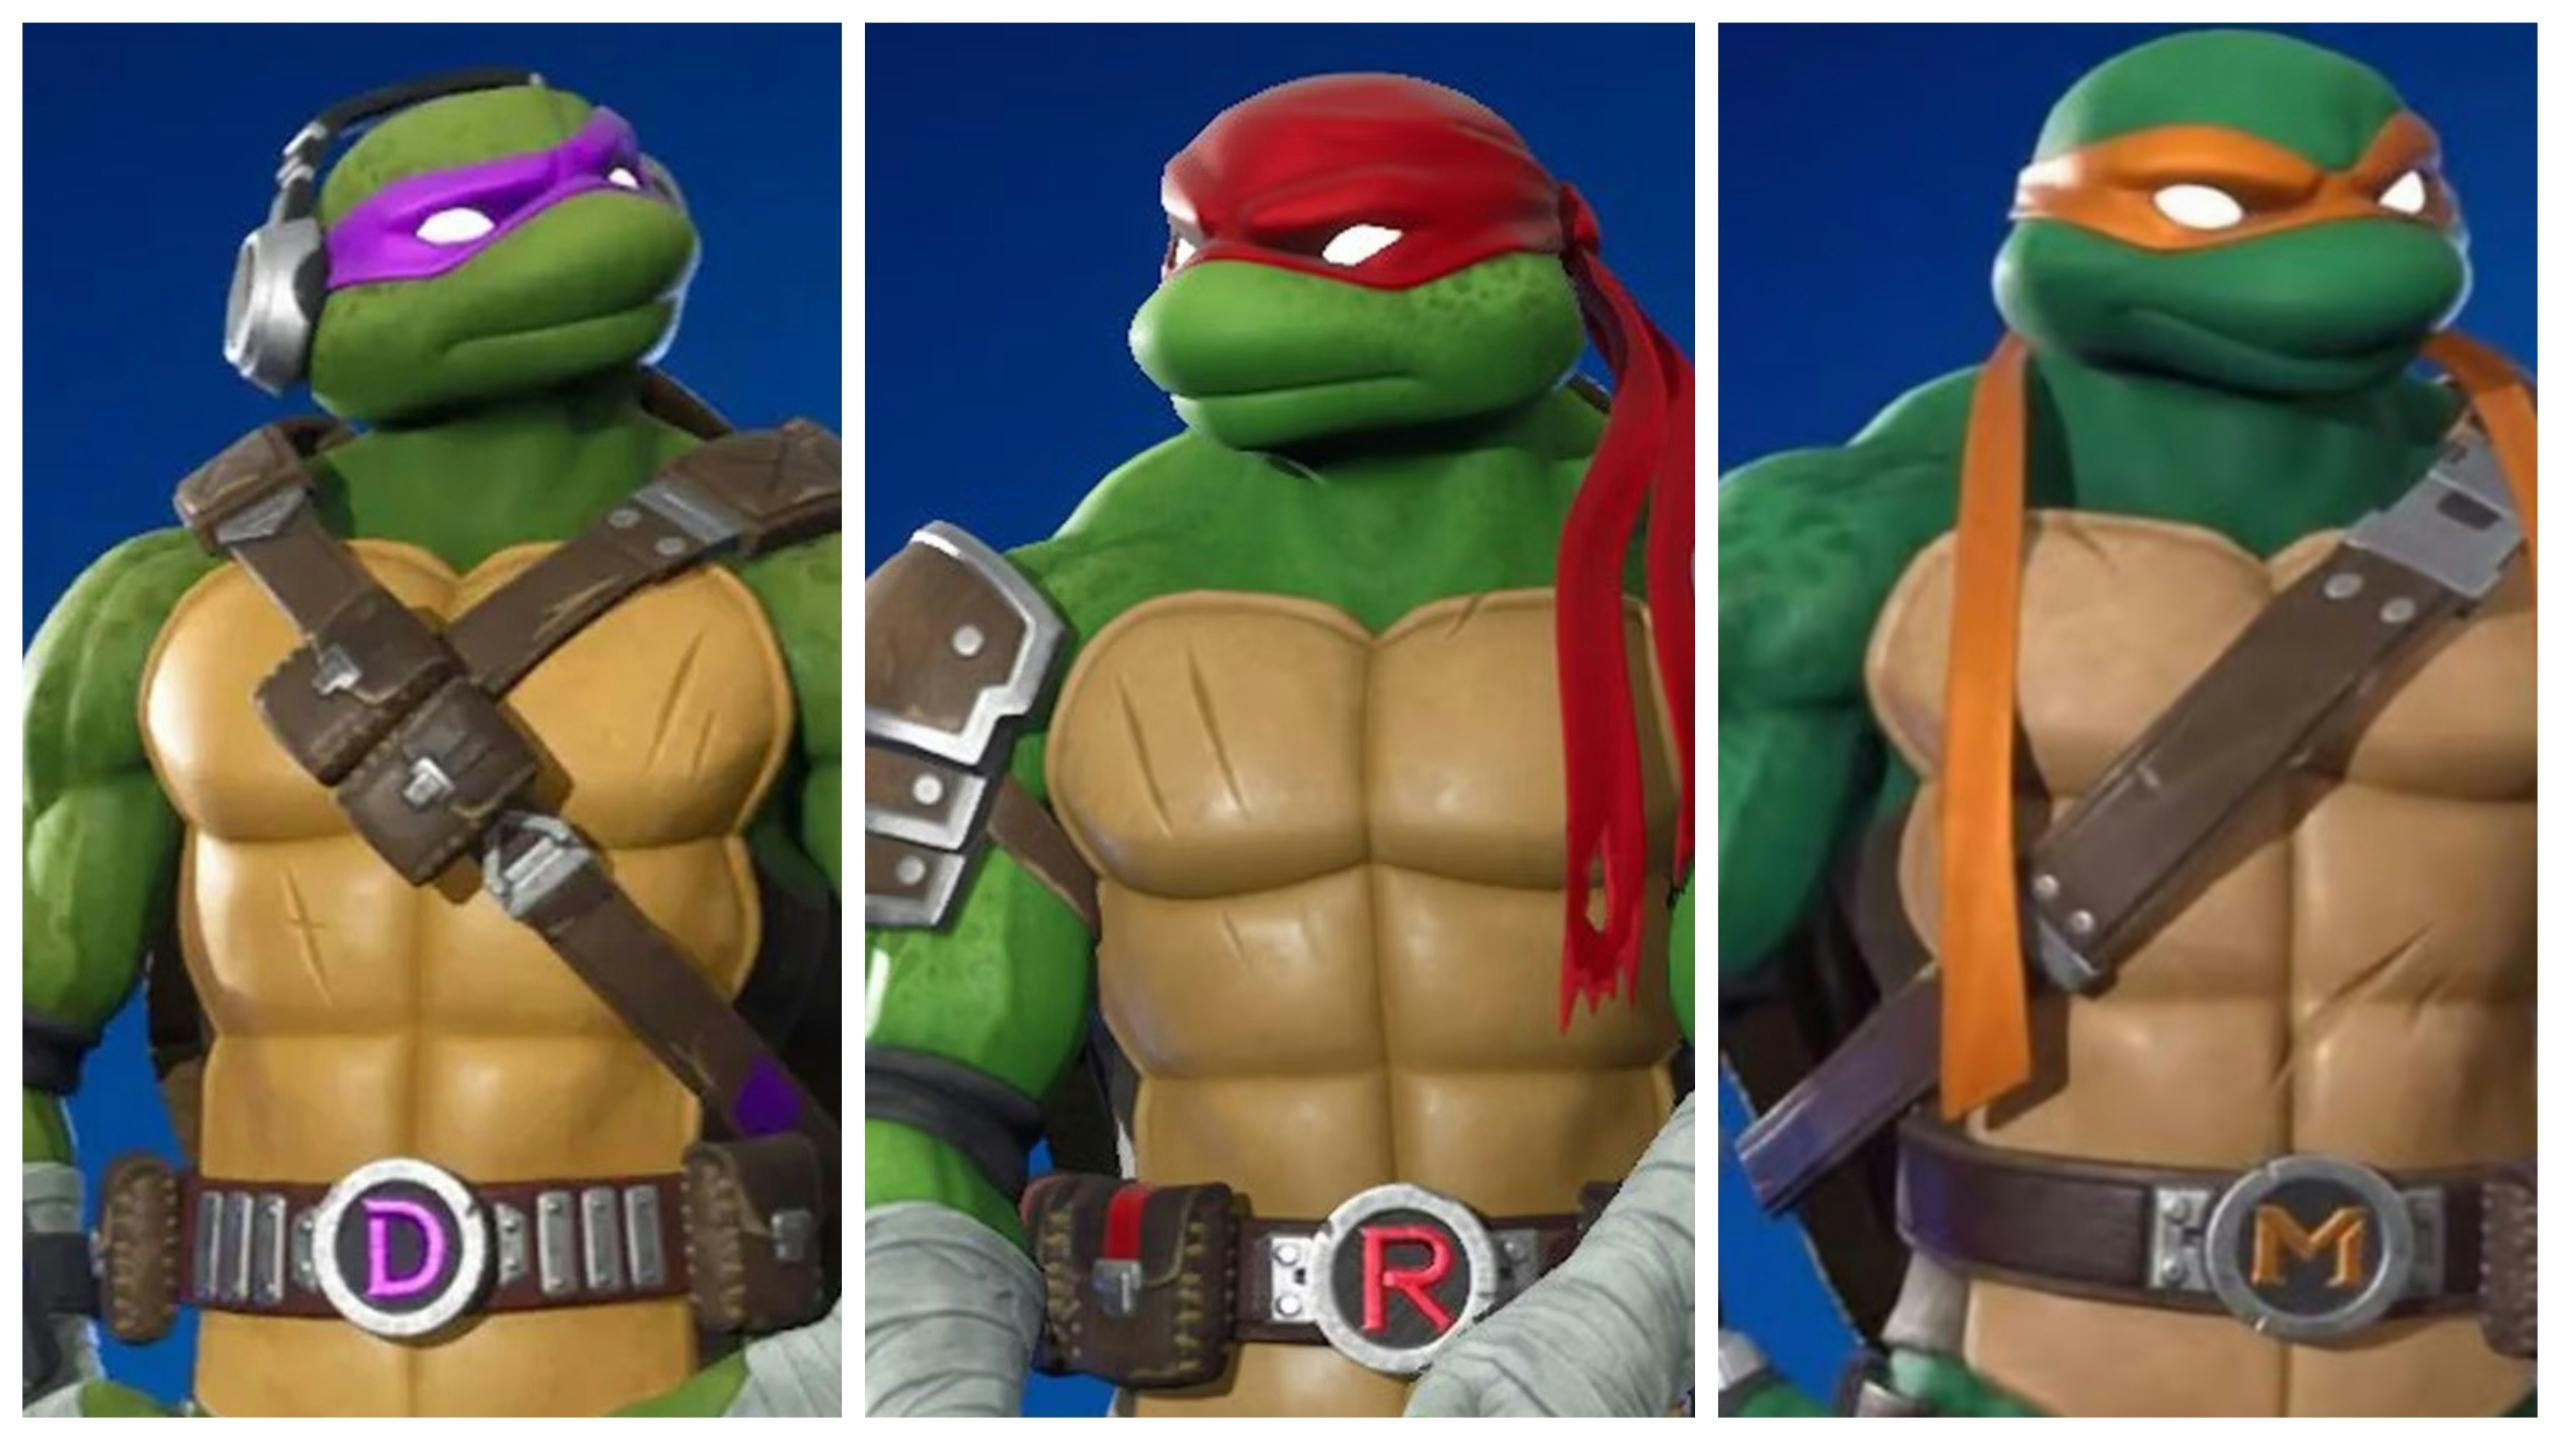 Skins for Leonardo, Donatello, Raphael, and Michaelangelo have all been teased as part of the TMNT x Fortnite crossover. 